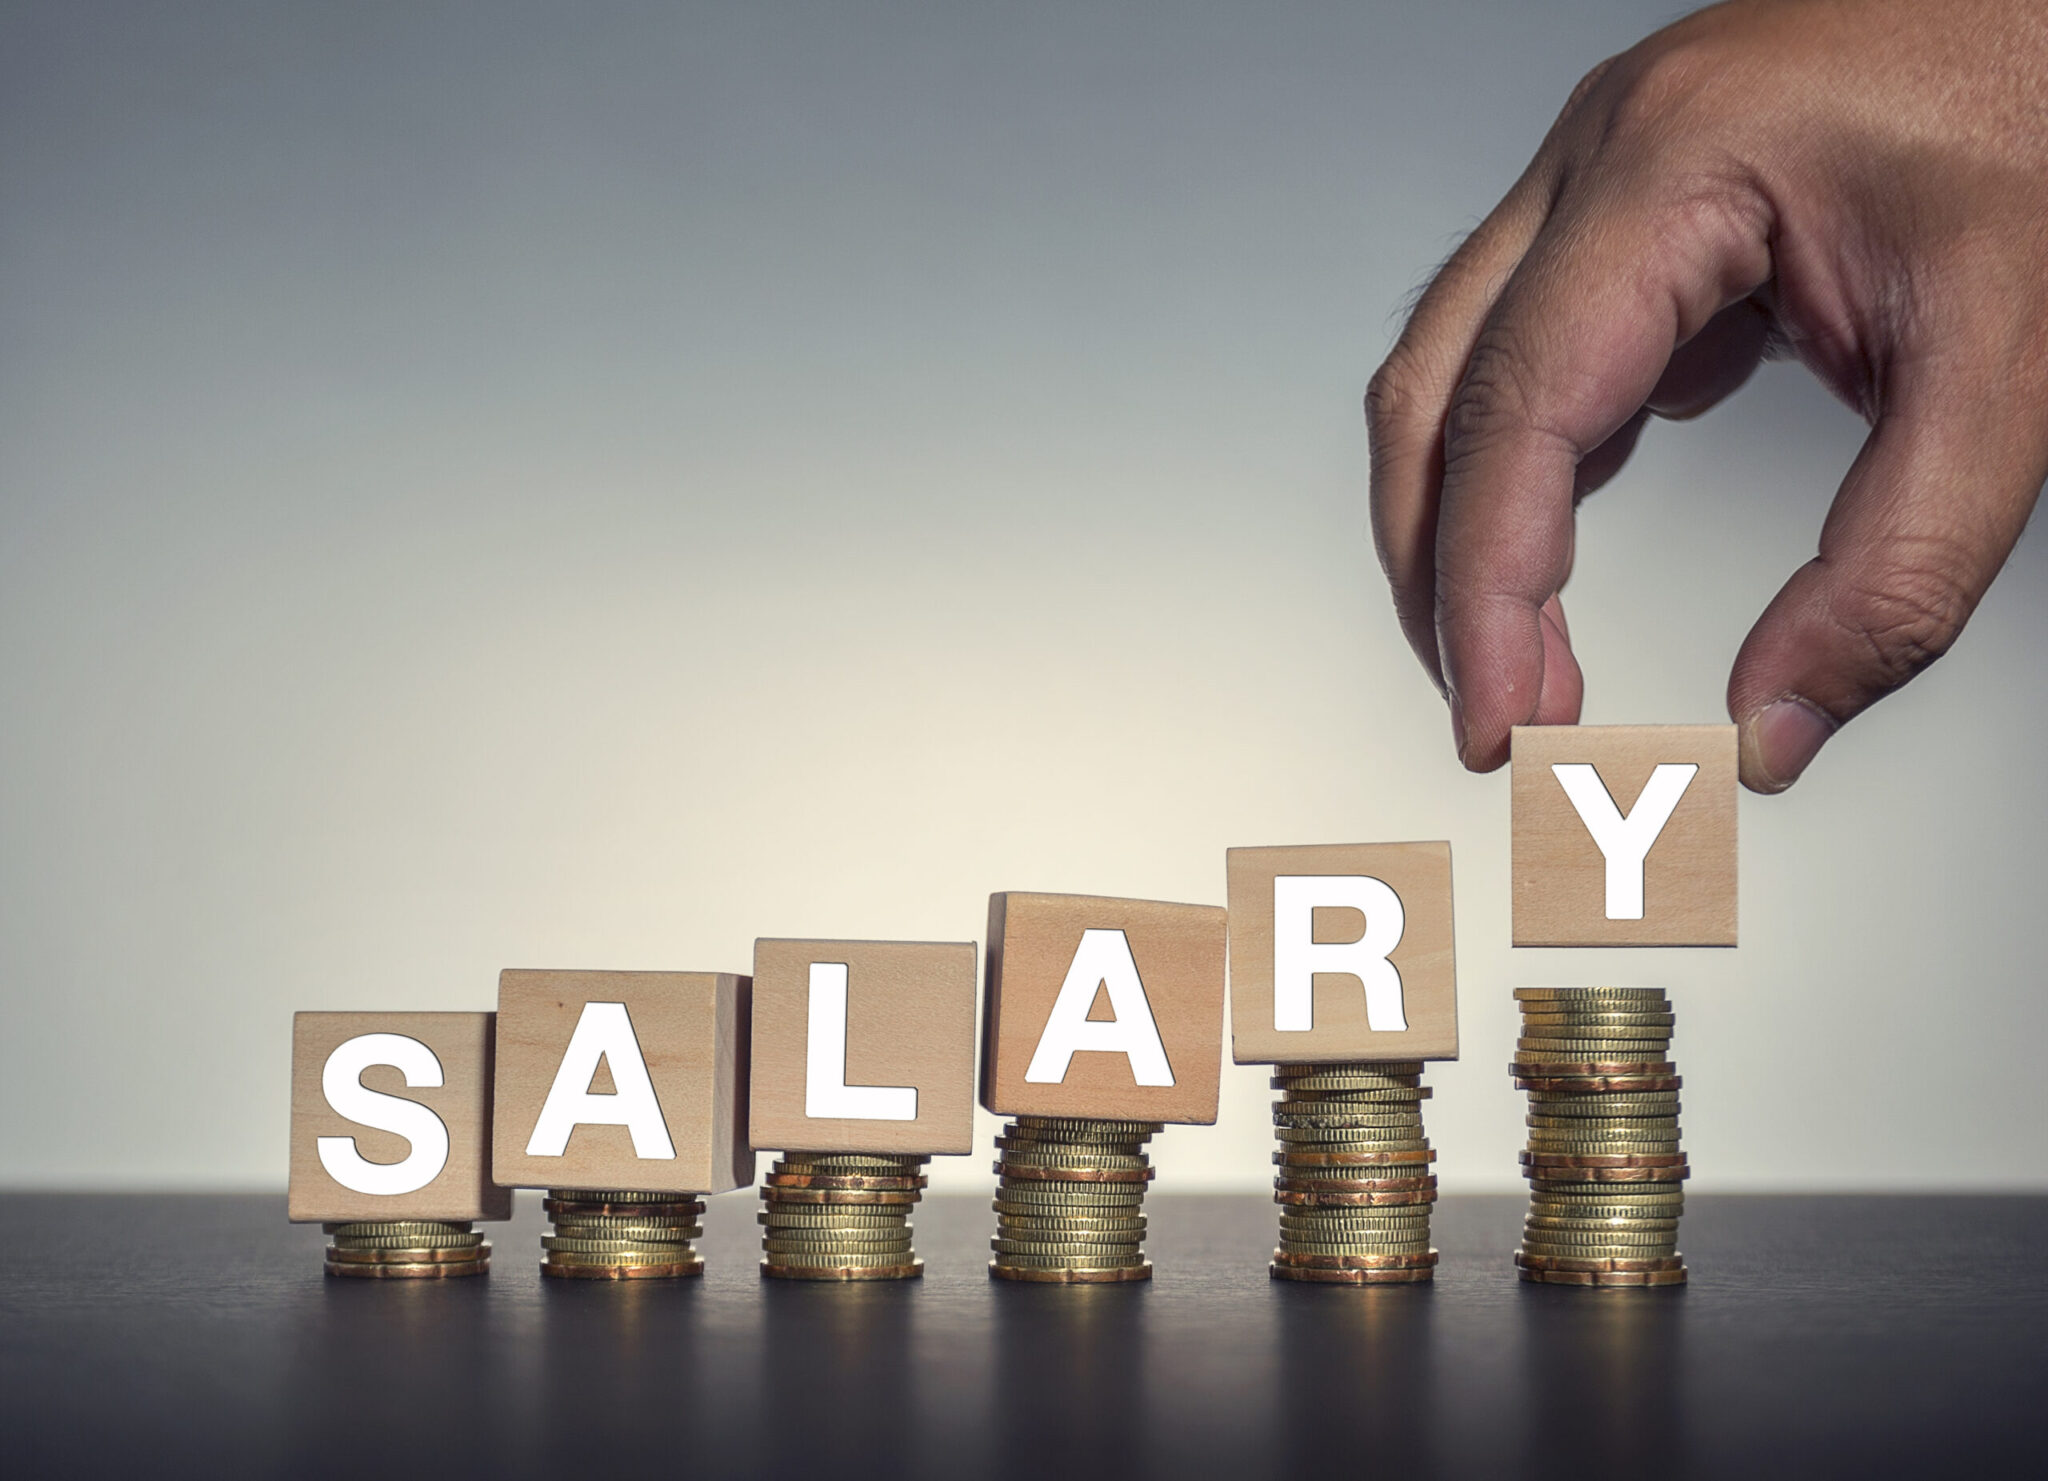 Job Salaries In Singapore For Various Professions